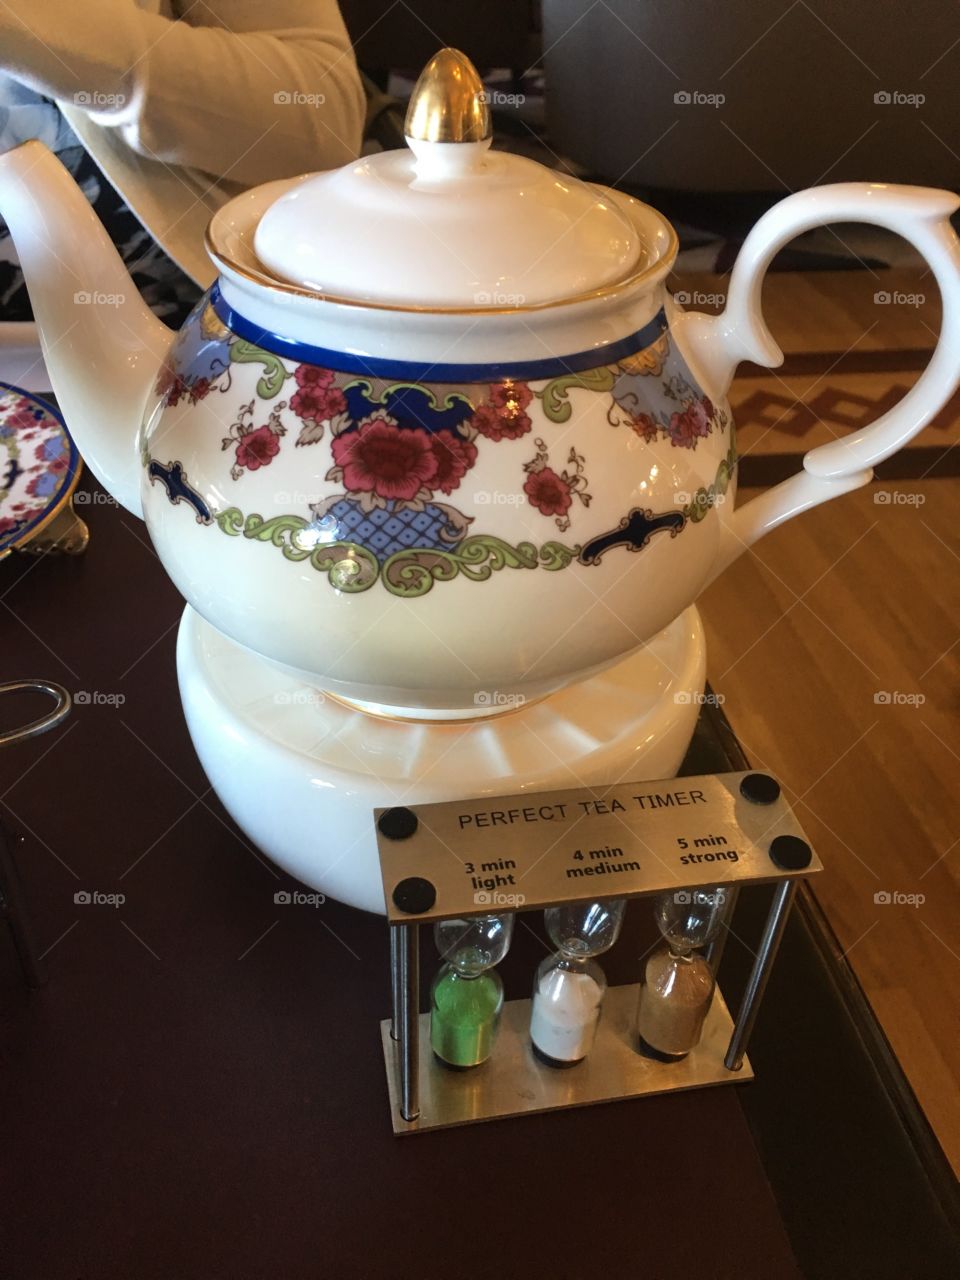 Tea brewing